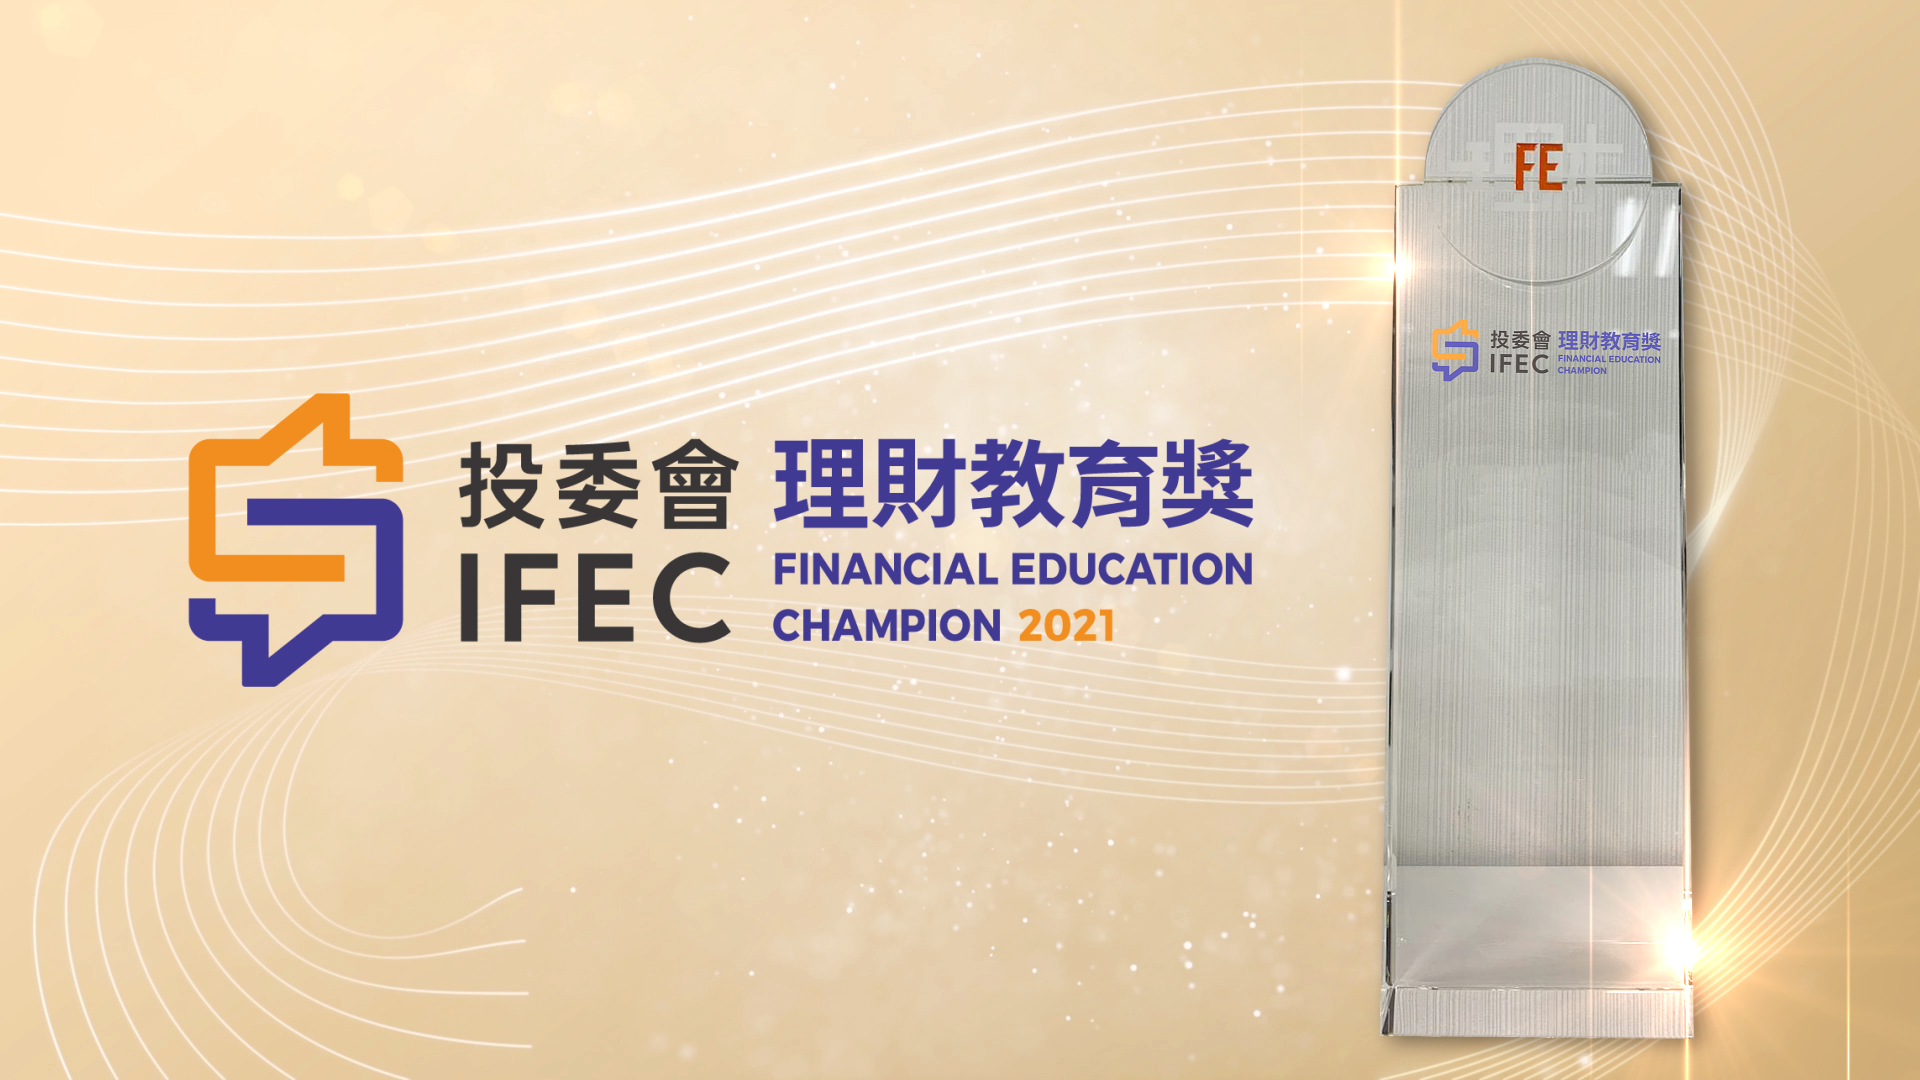 Financial Education Champion